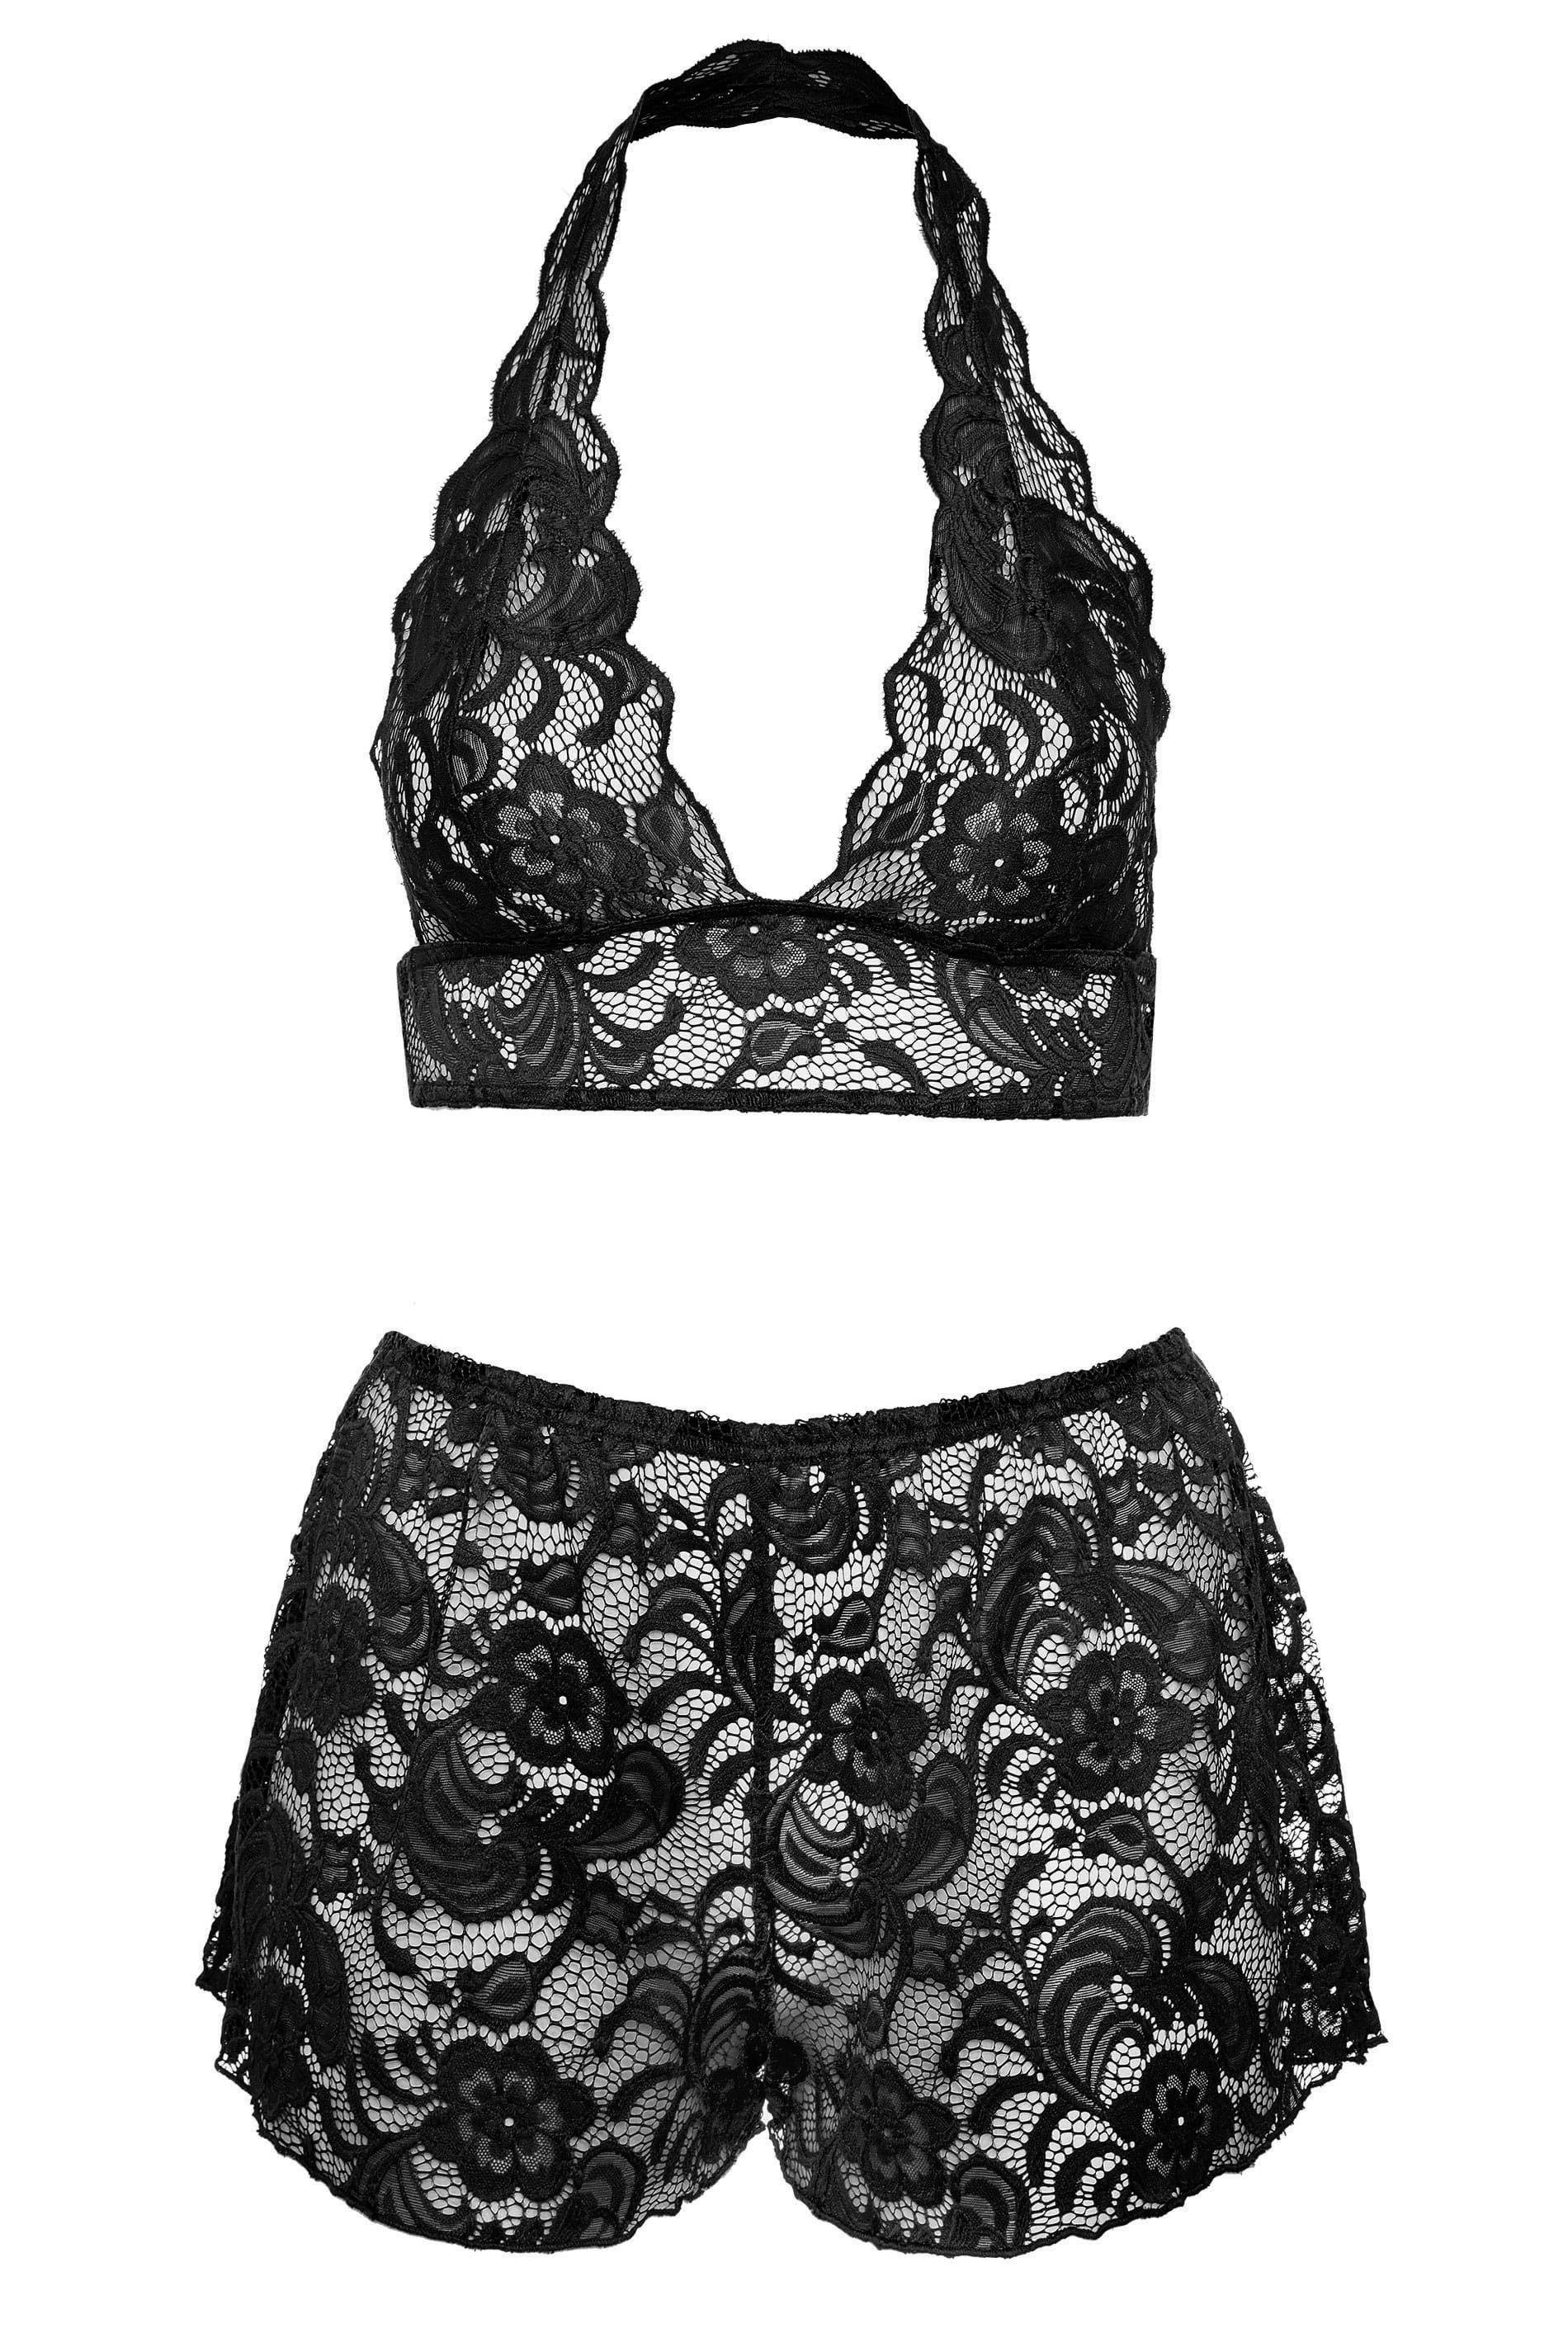 LIMITED COLLECTION Black Lace Bralette & Shorts Lingerie Set | Yours ...